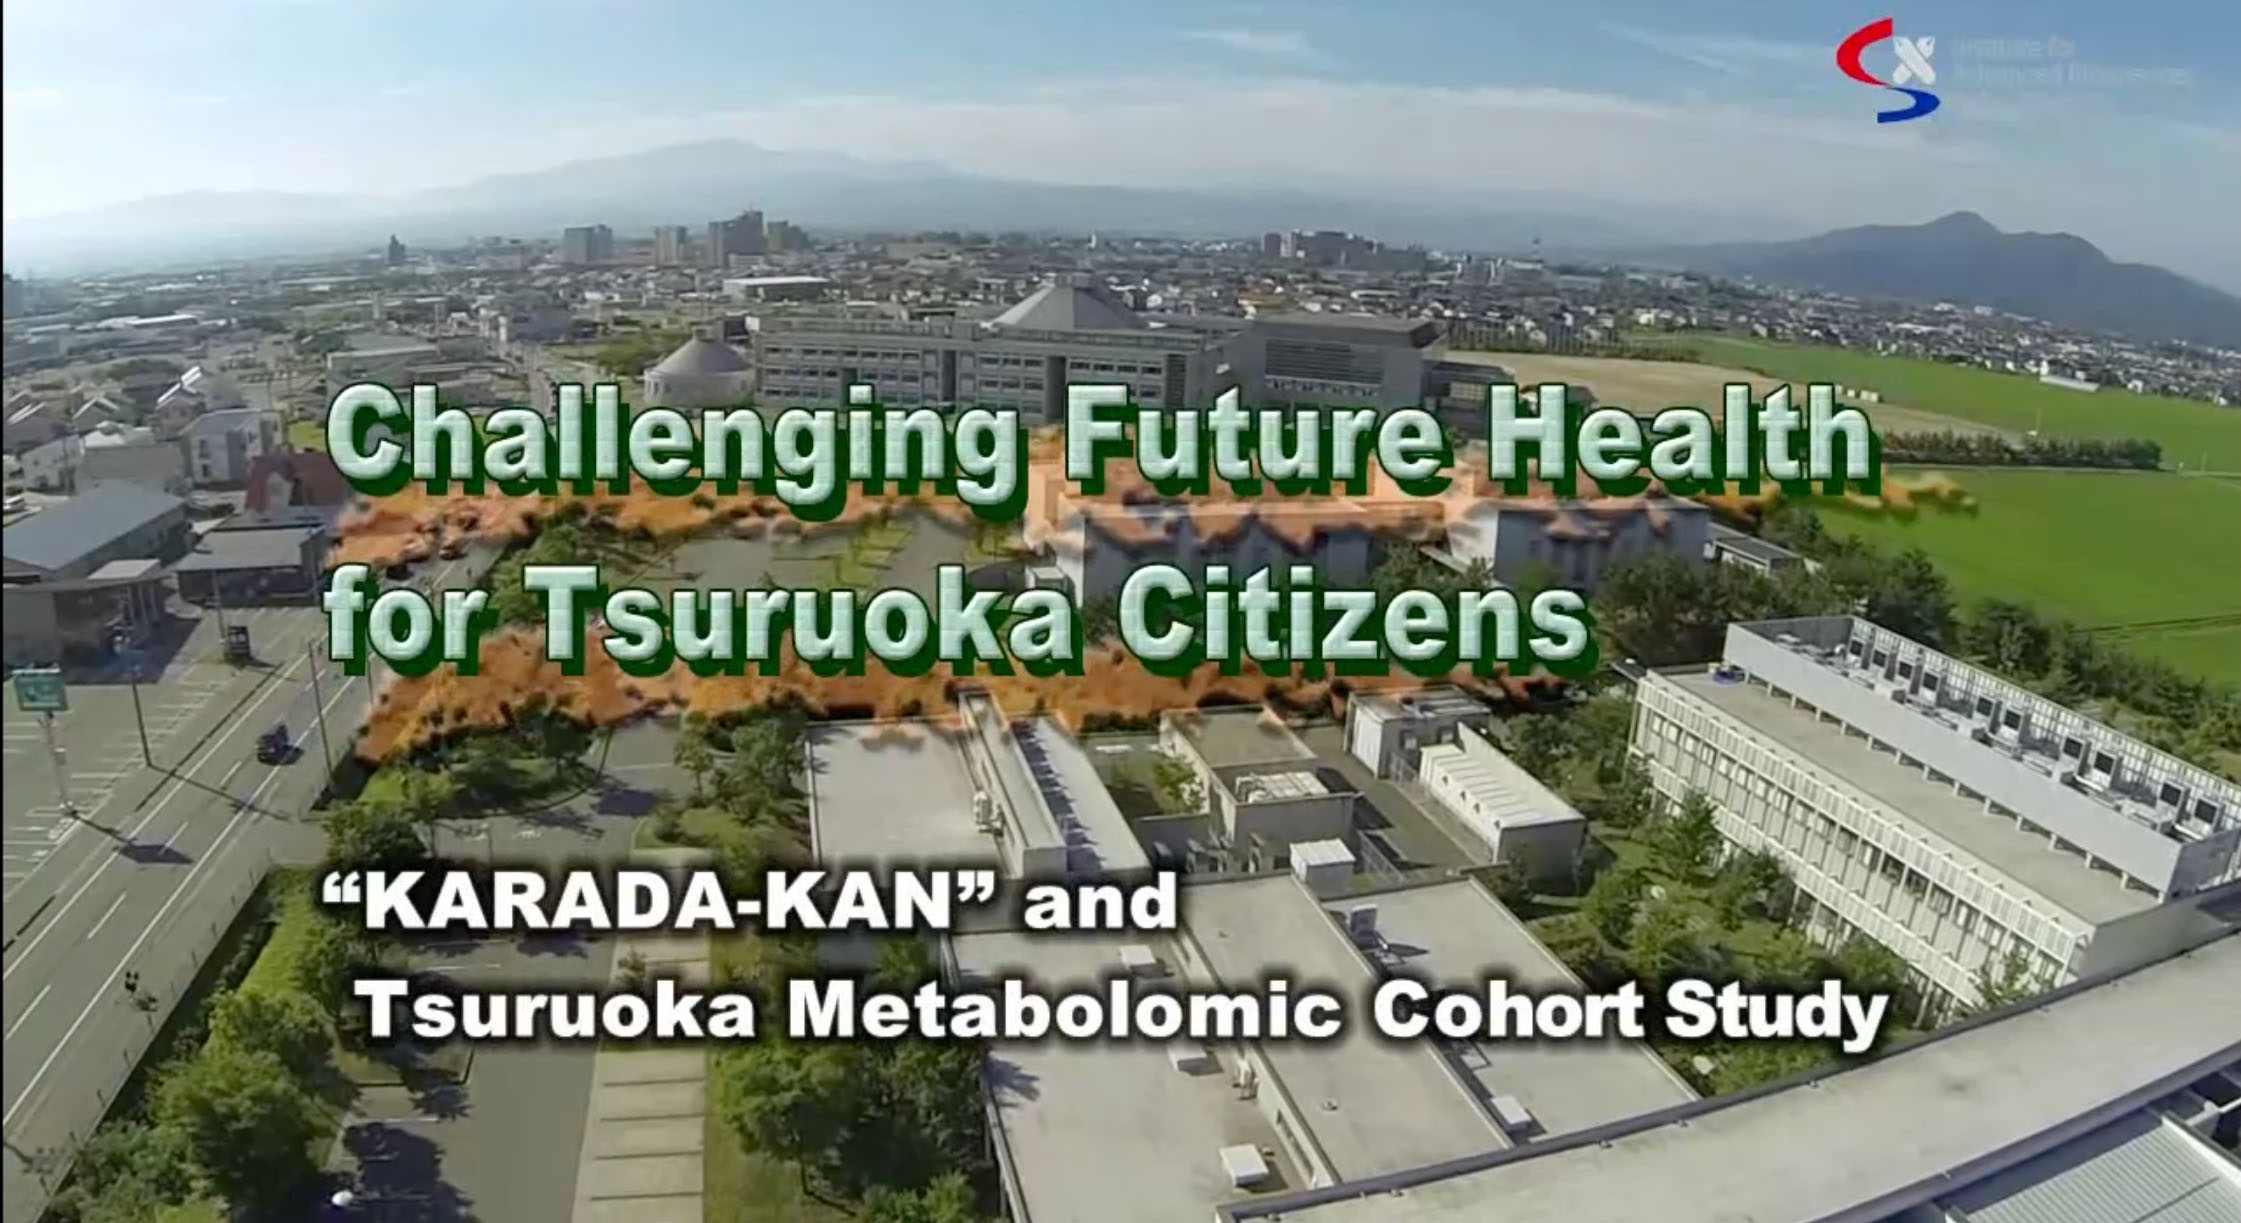 Empowering individuals and communities: Karada-kan and Tsuruoka Metabolomic Cohort Study